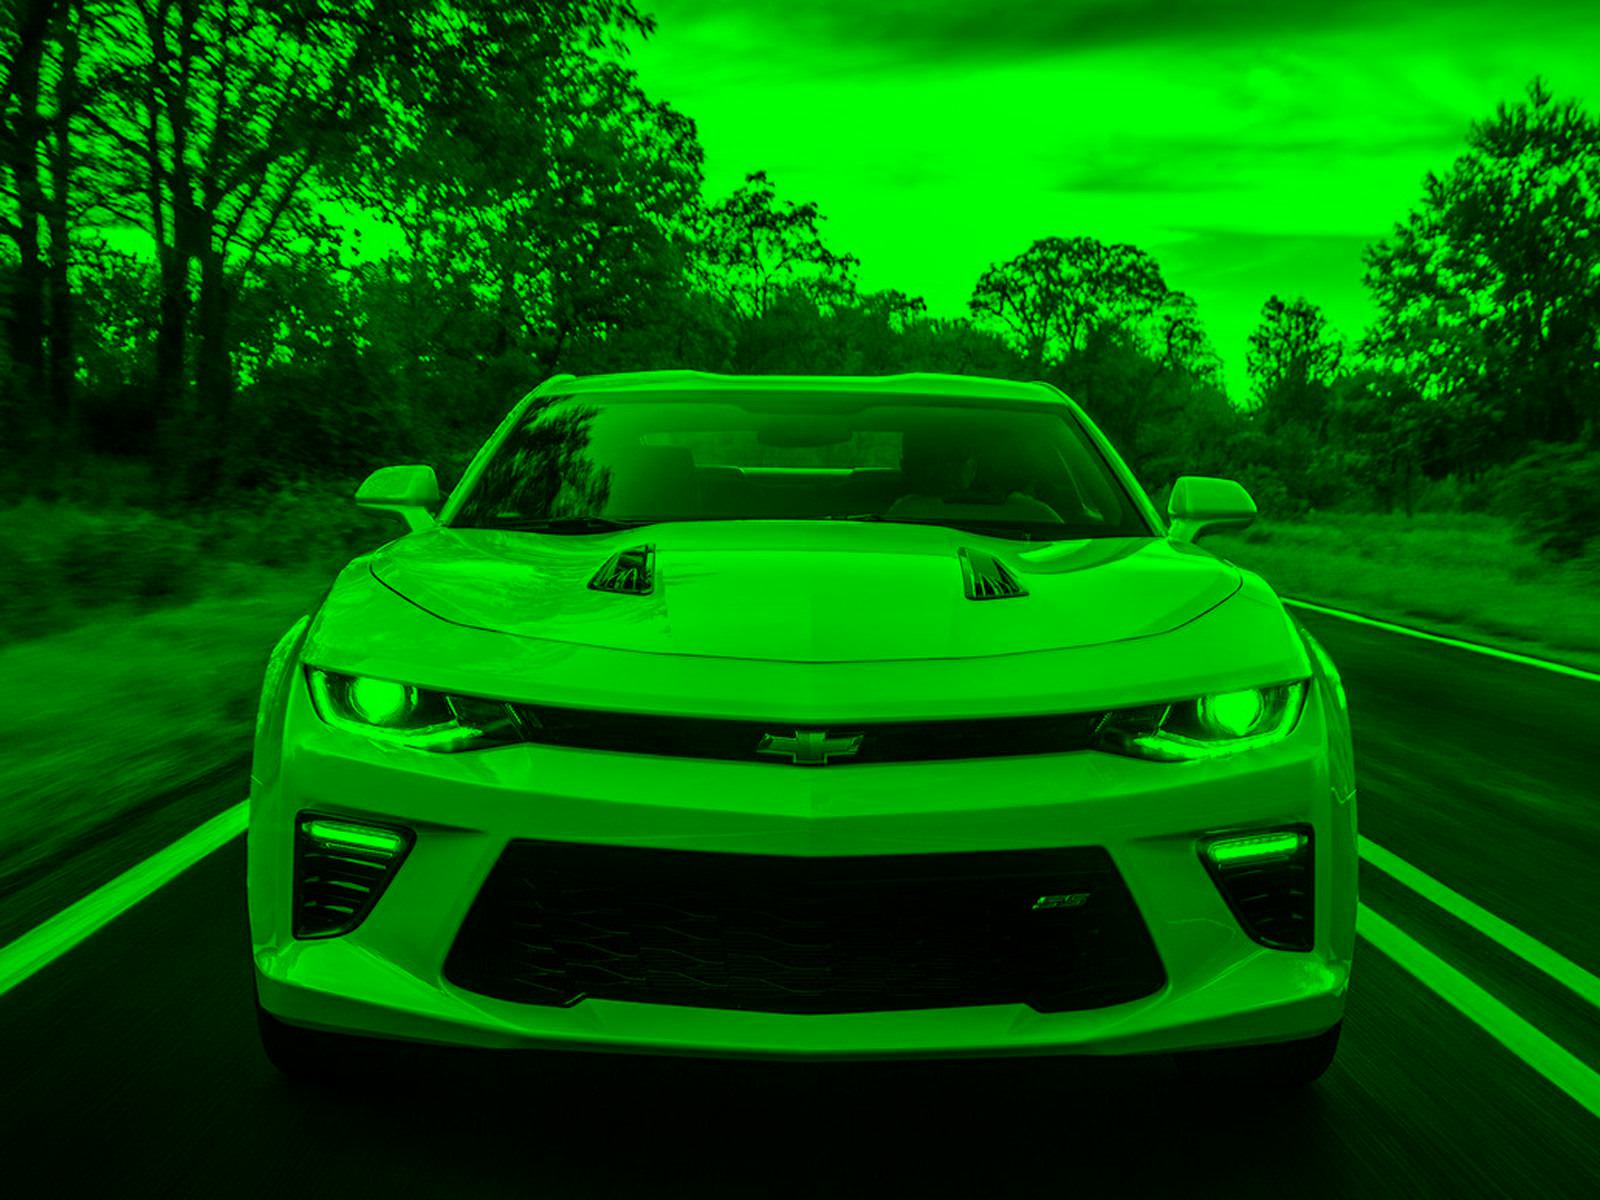 green only image of camaro car